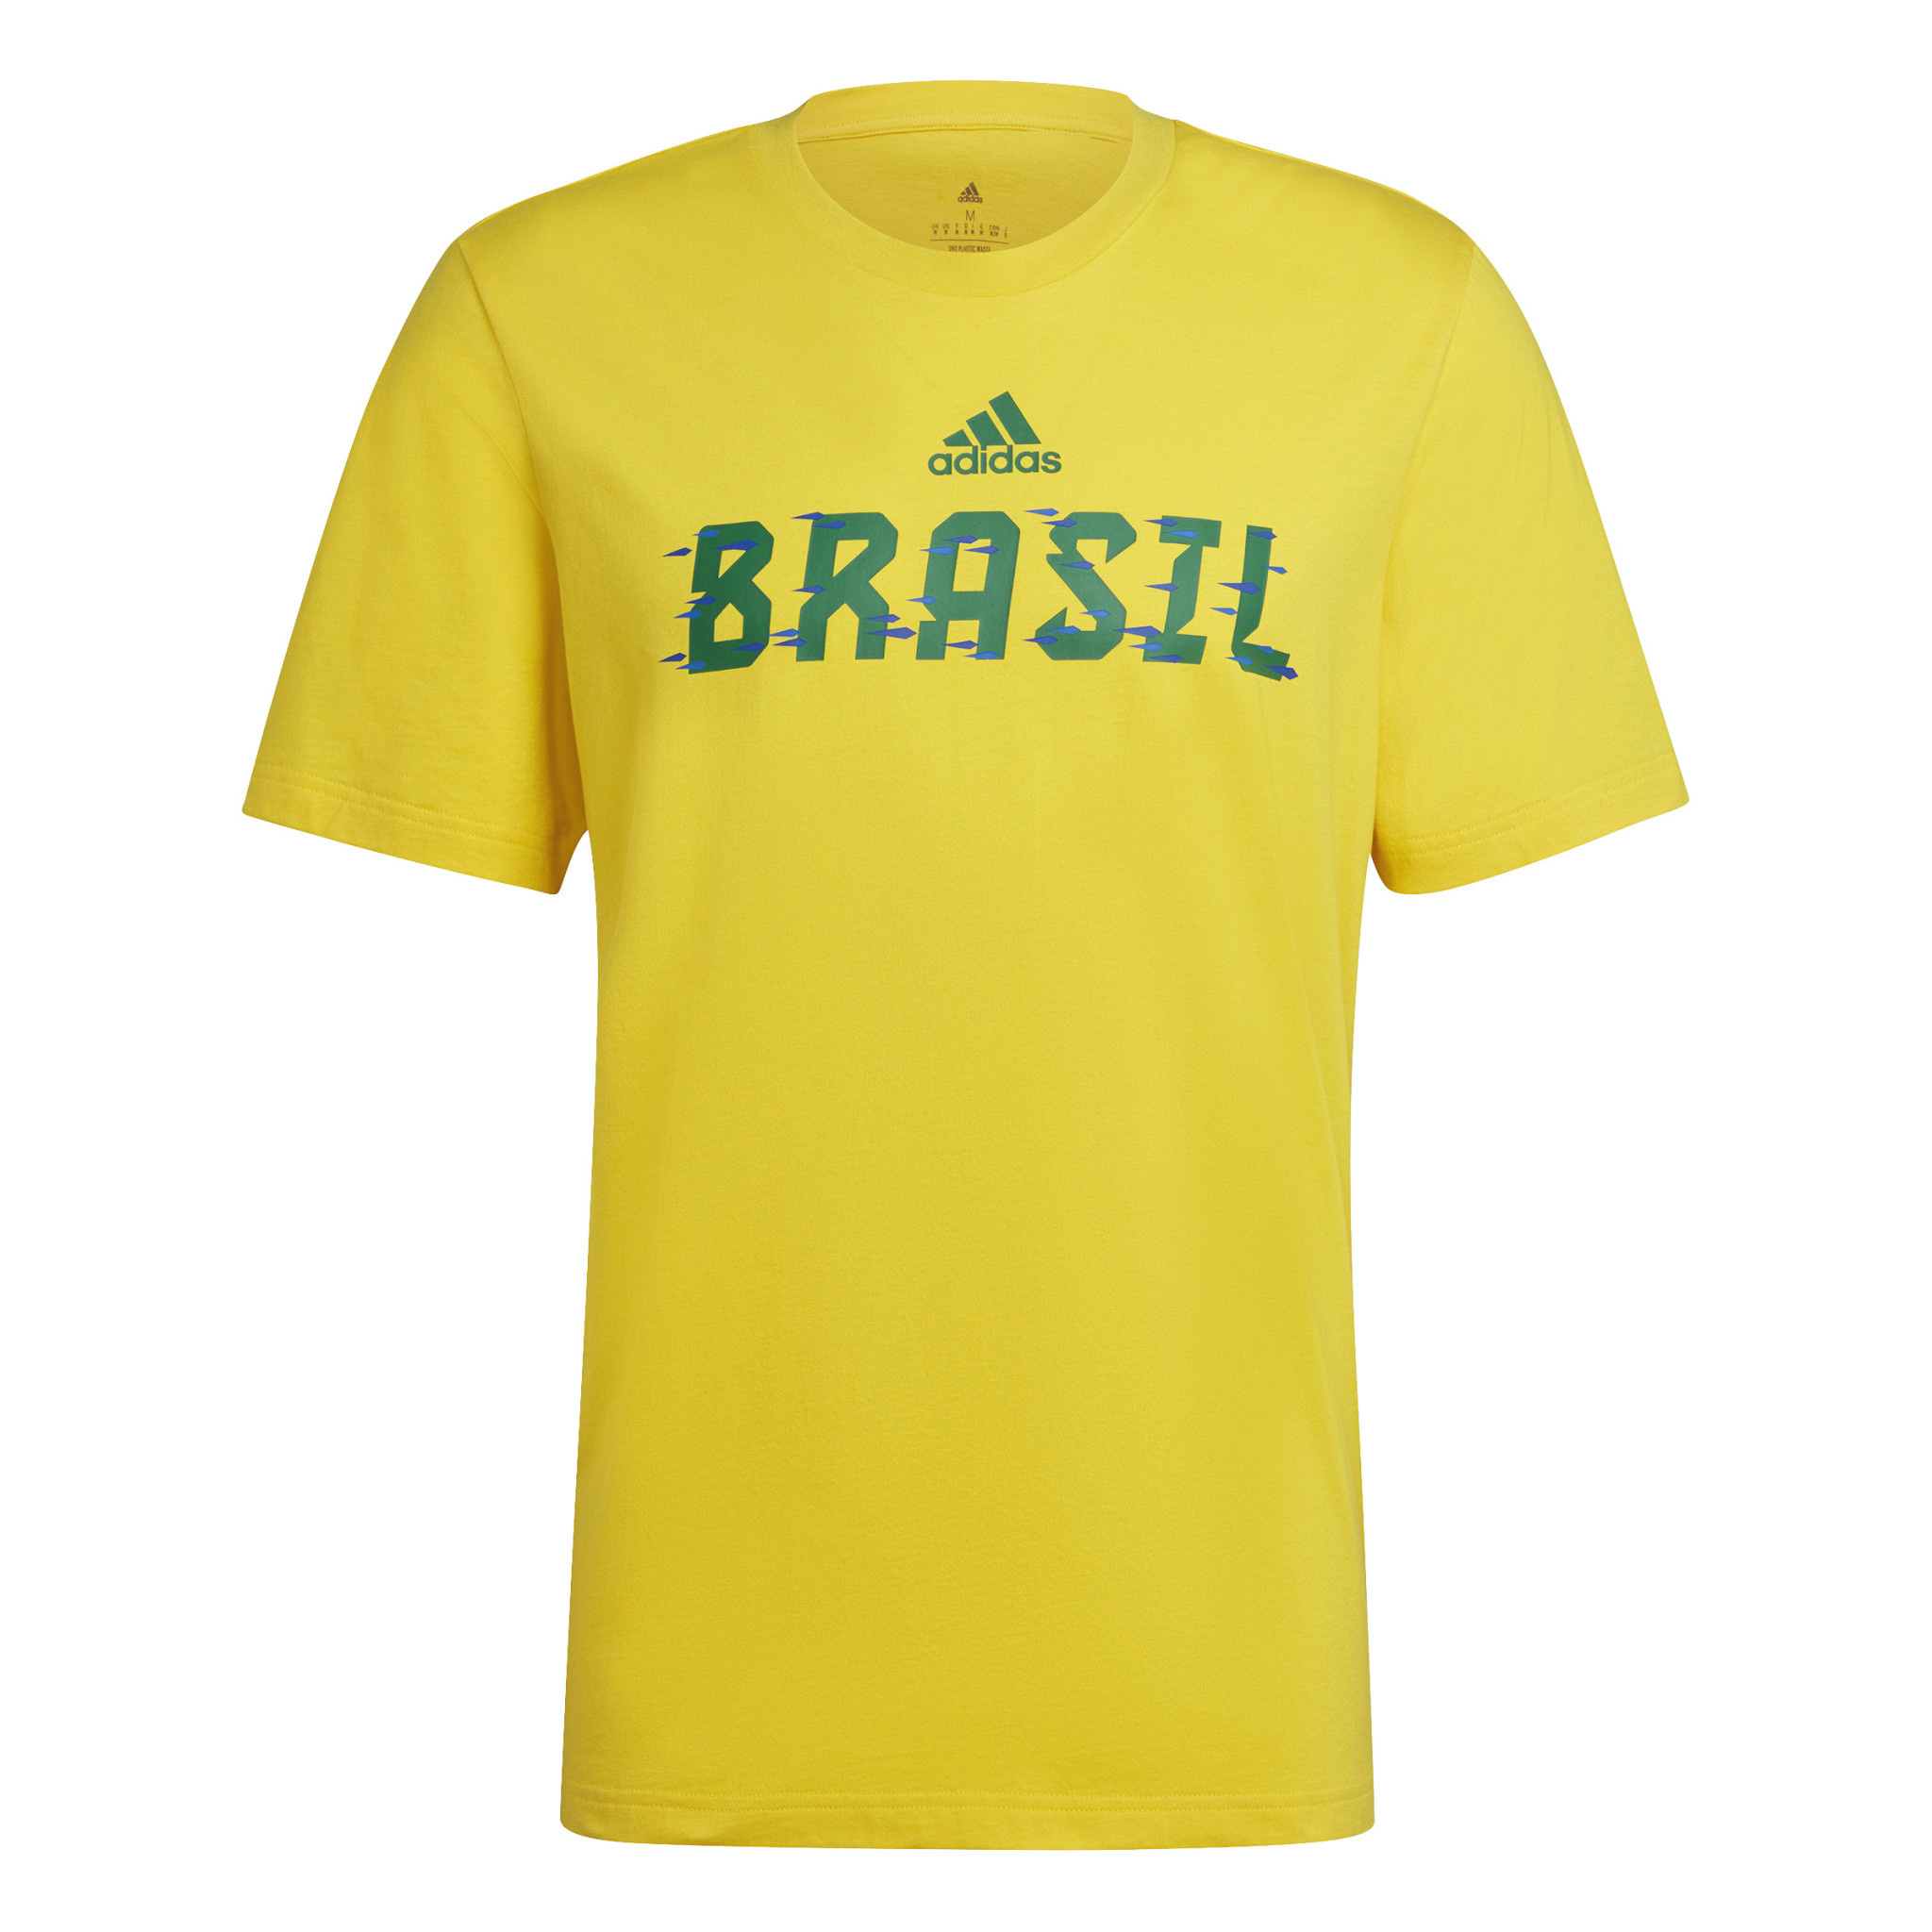 brazil wc shirt